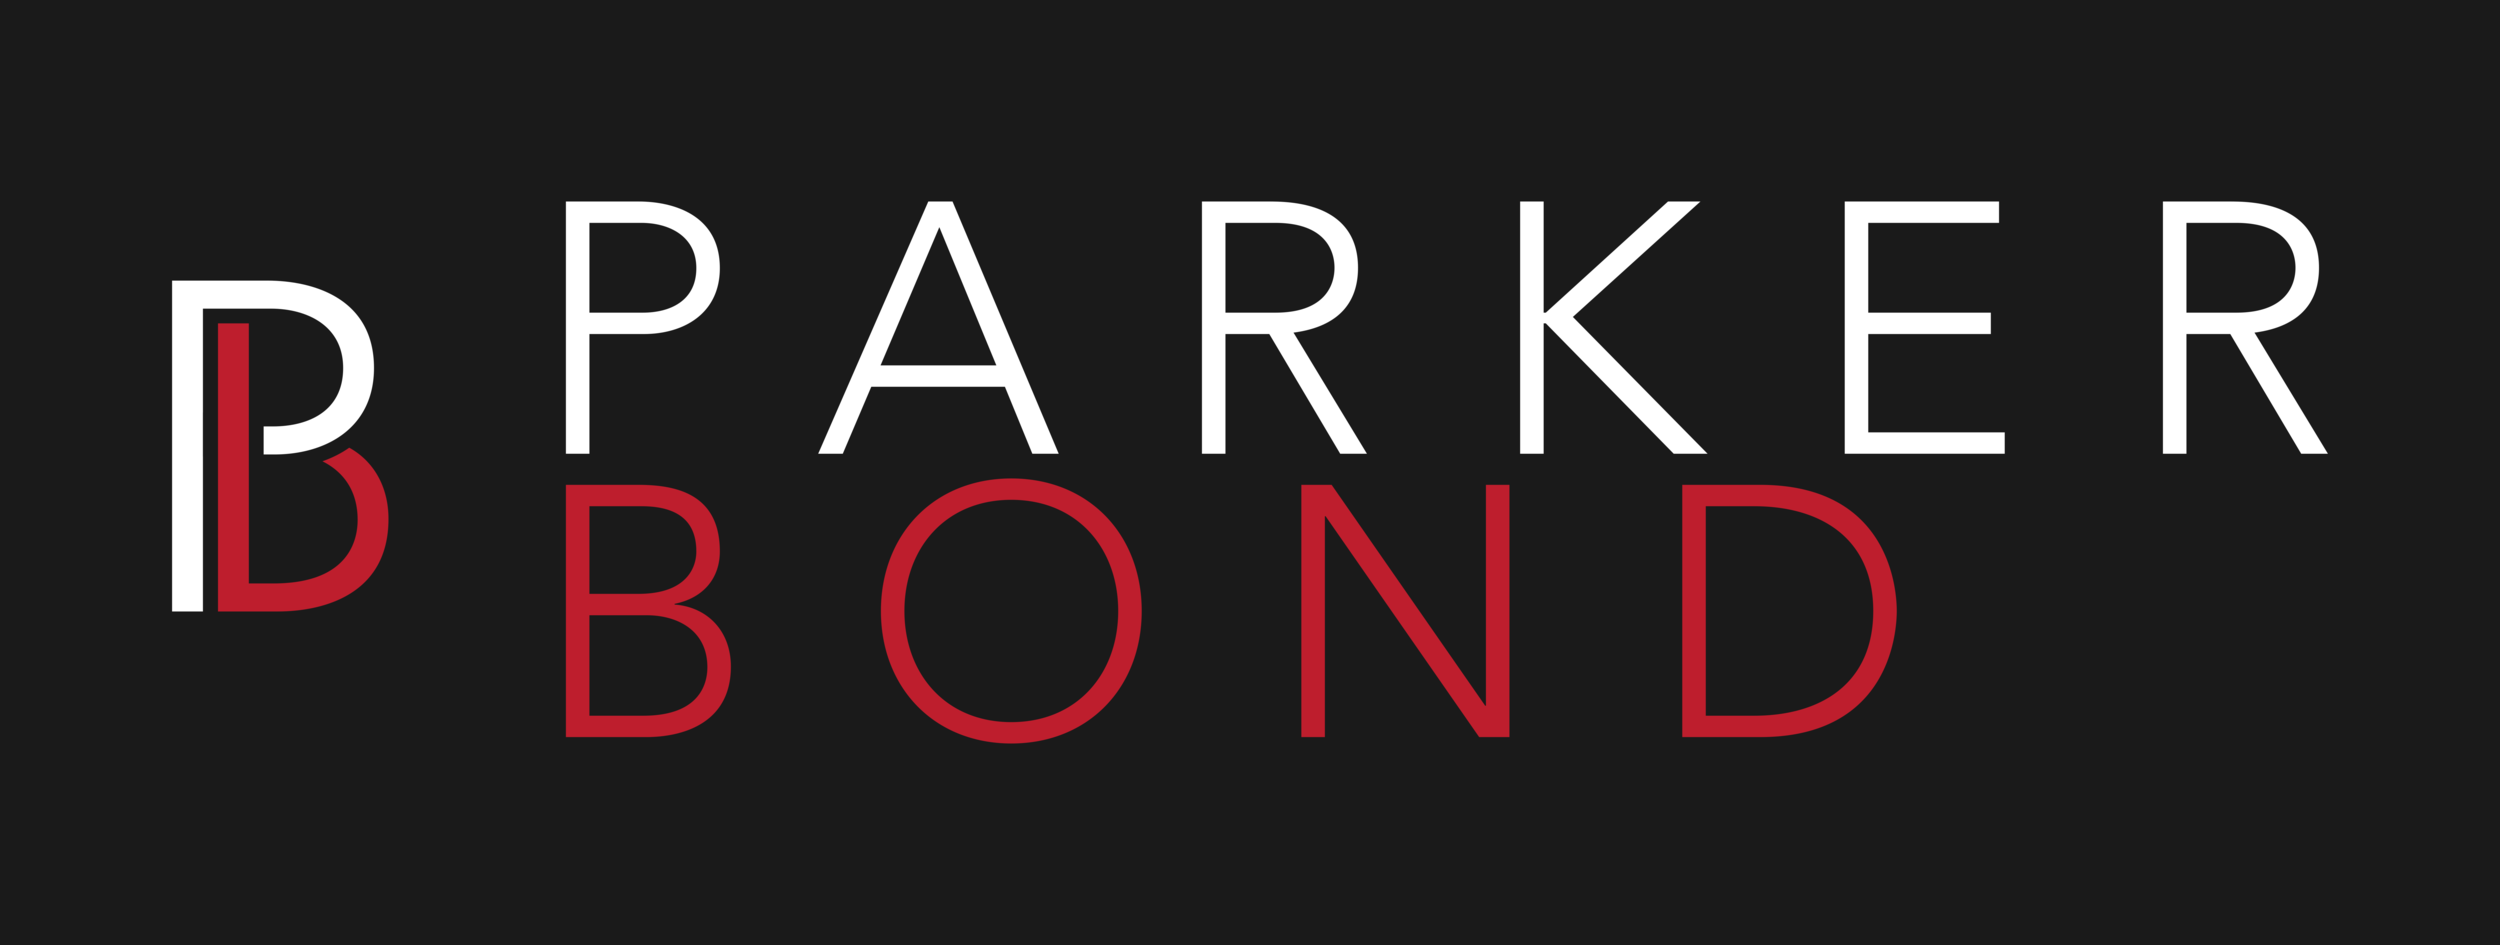 DARK ParkerBond (10000px).png